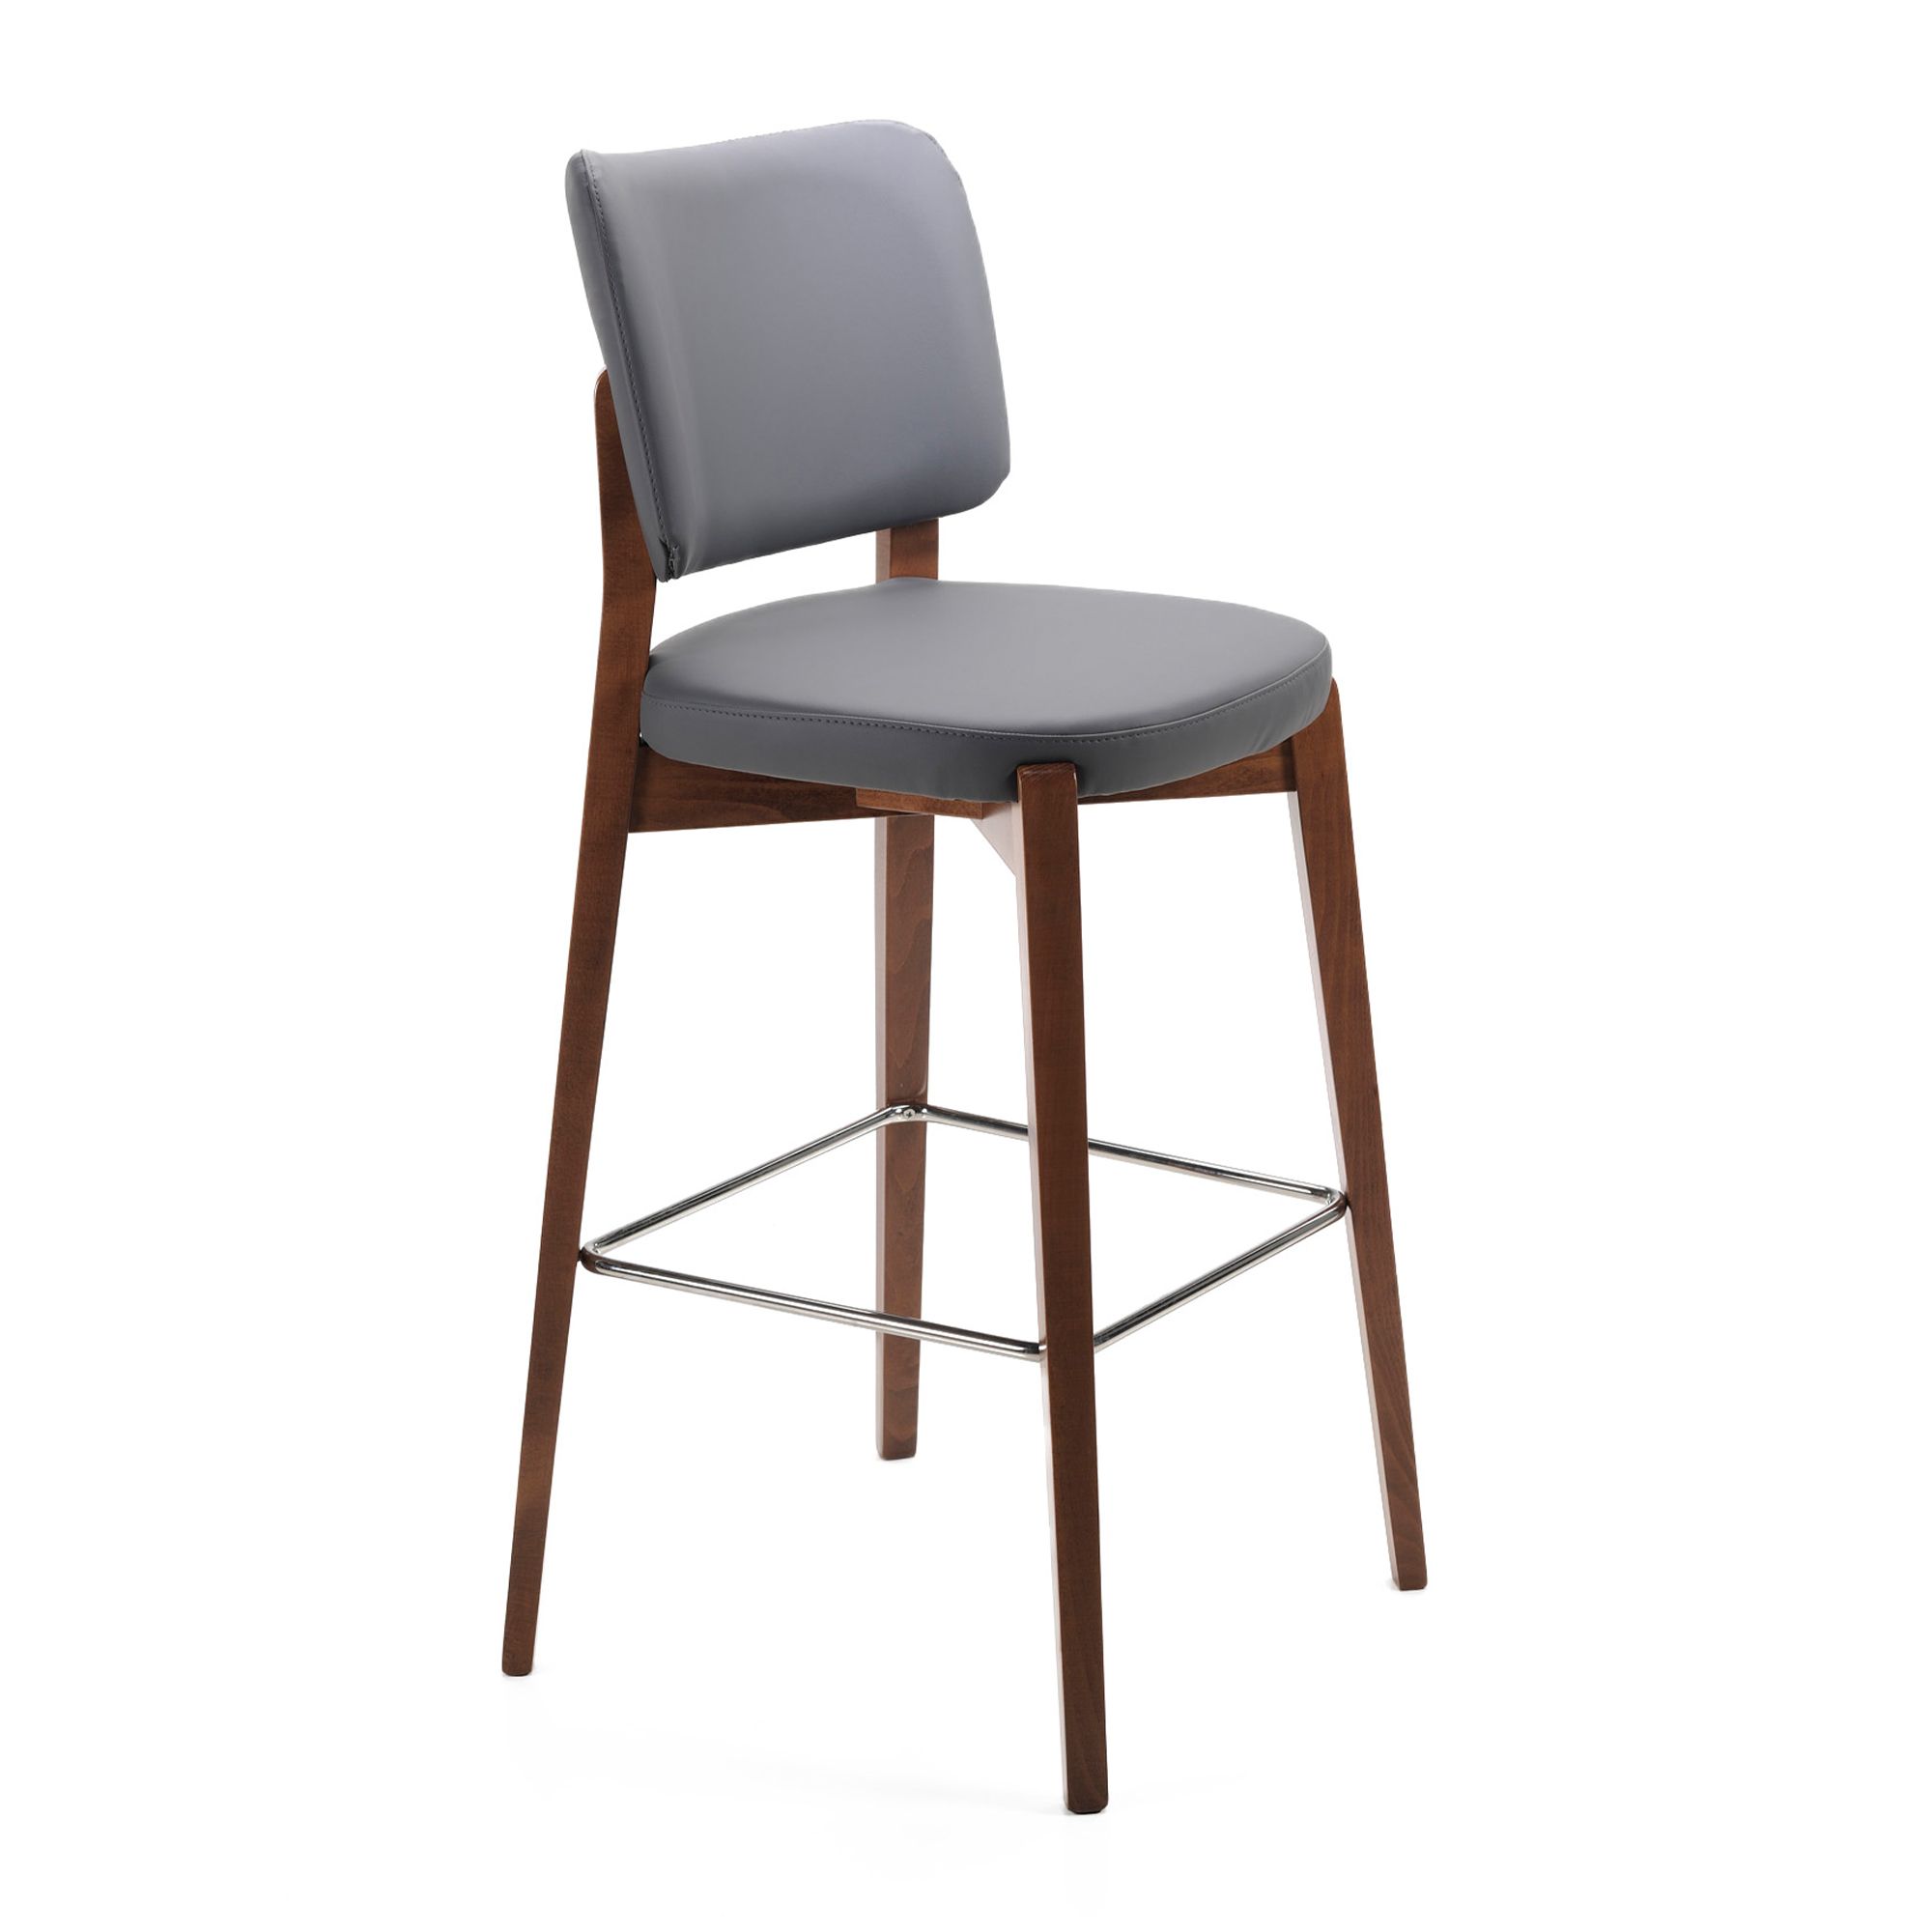 Model 855 stool modern style